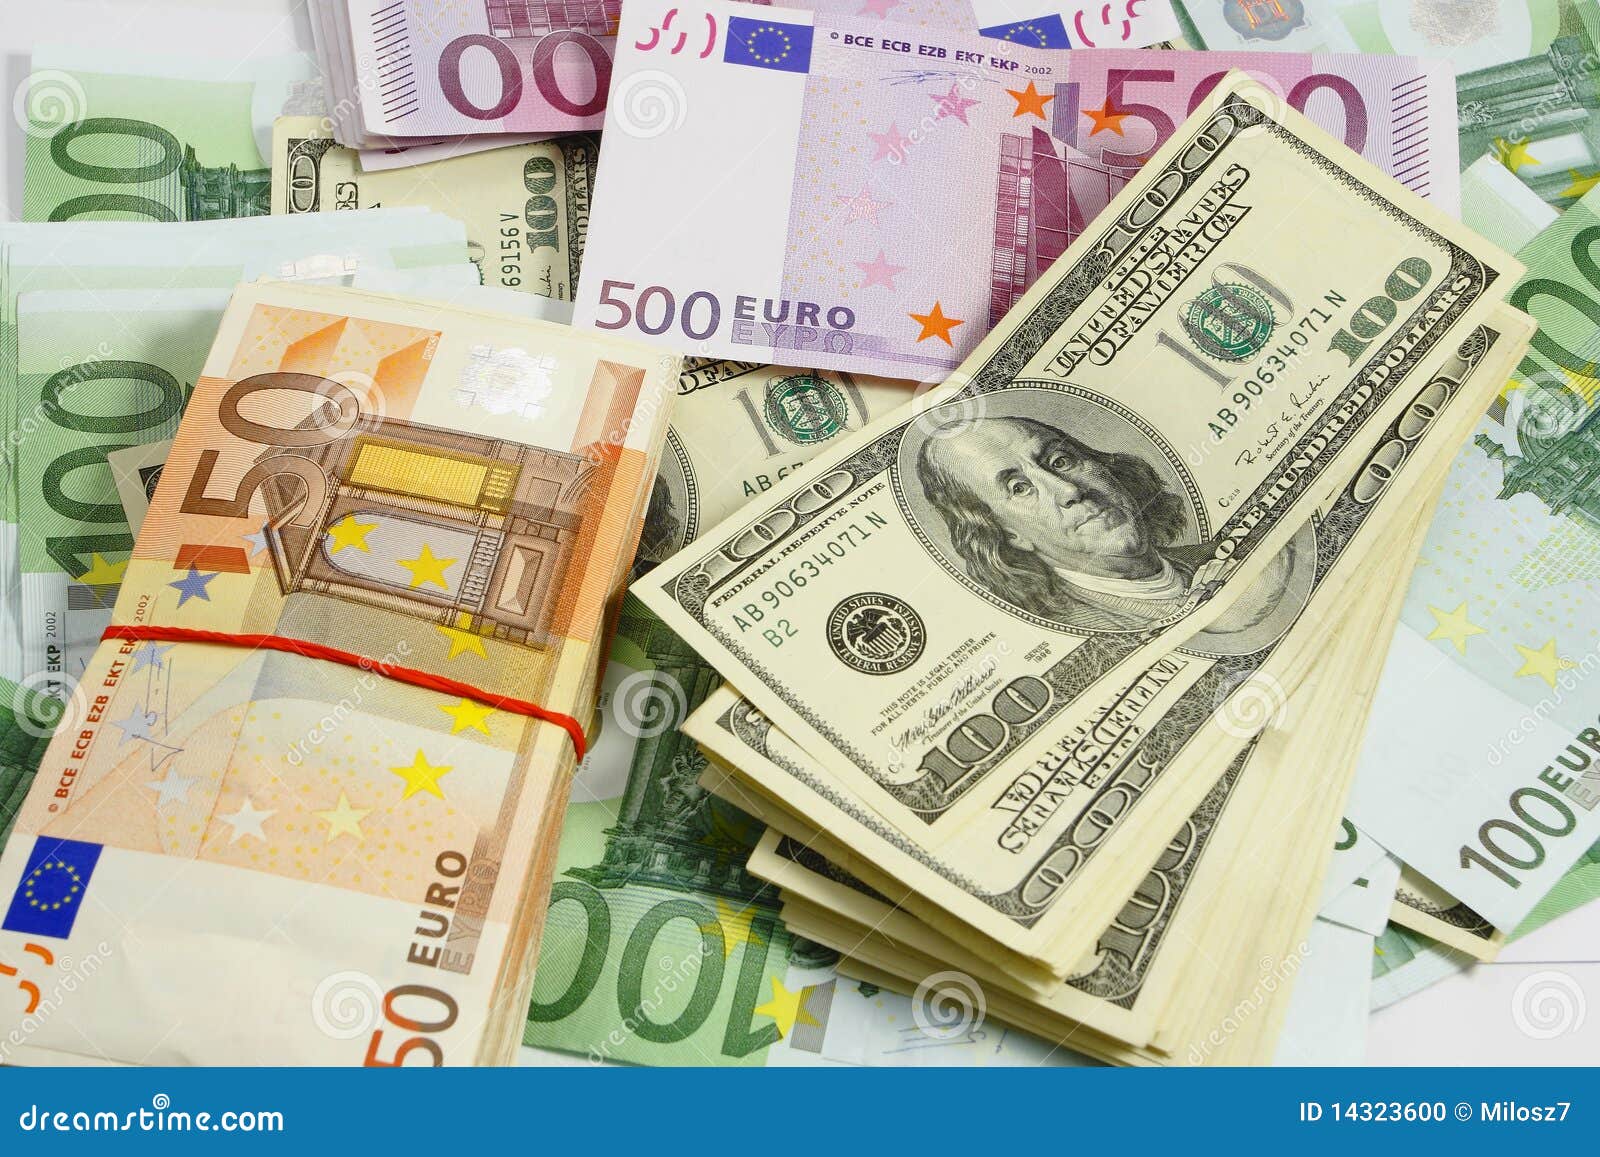 Euro and american money stock photo